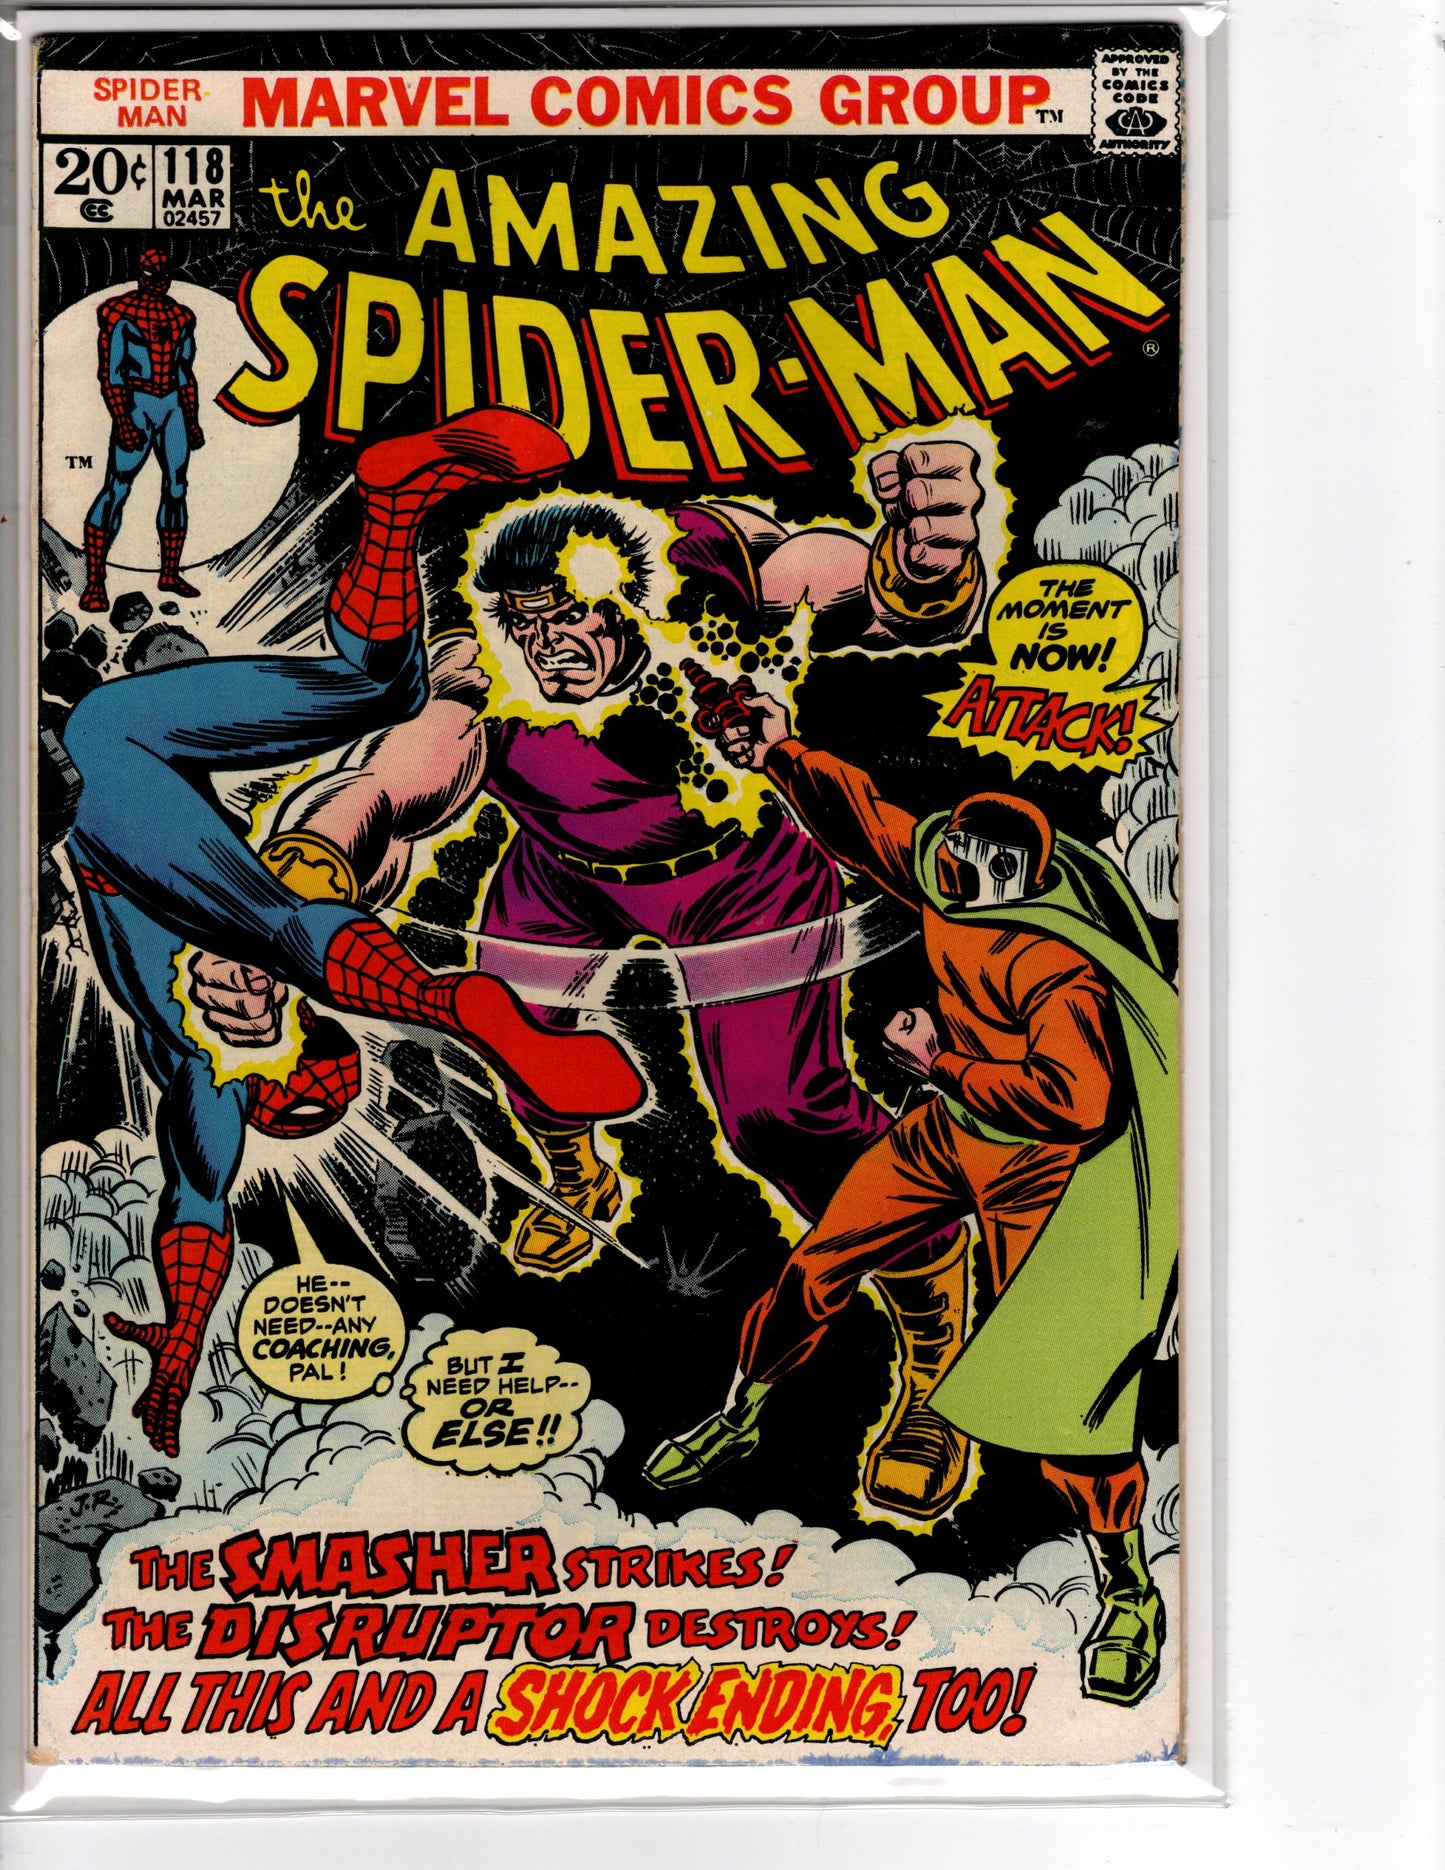 The Amazing Spider-Man #118